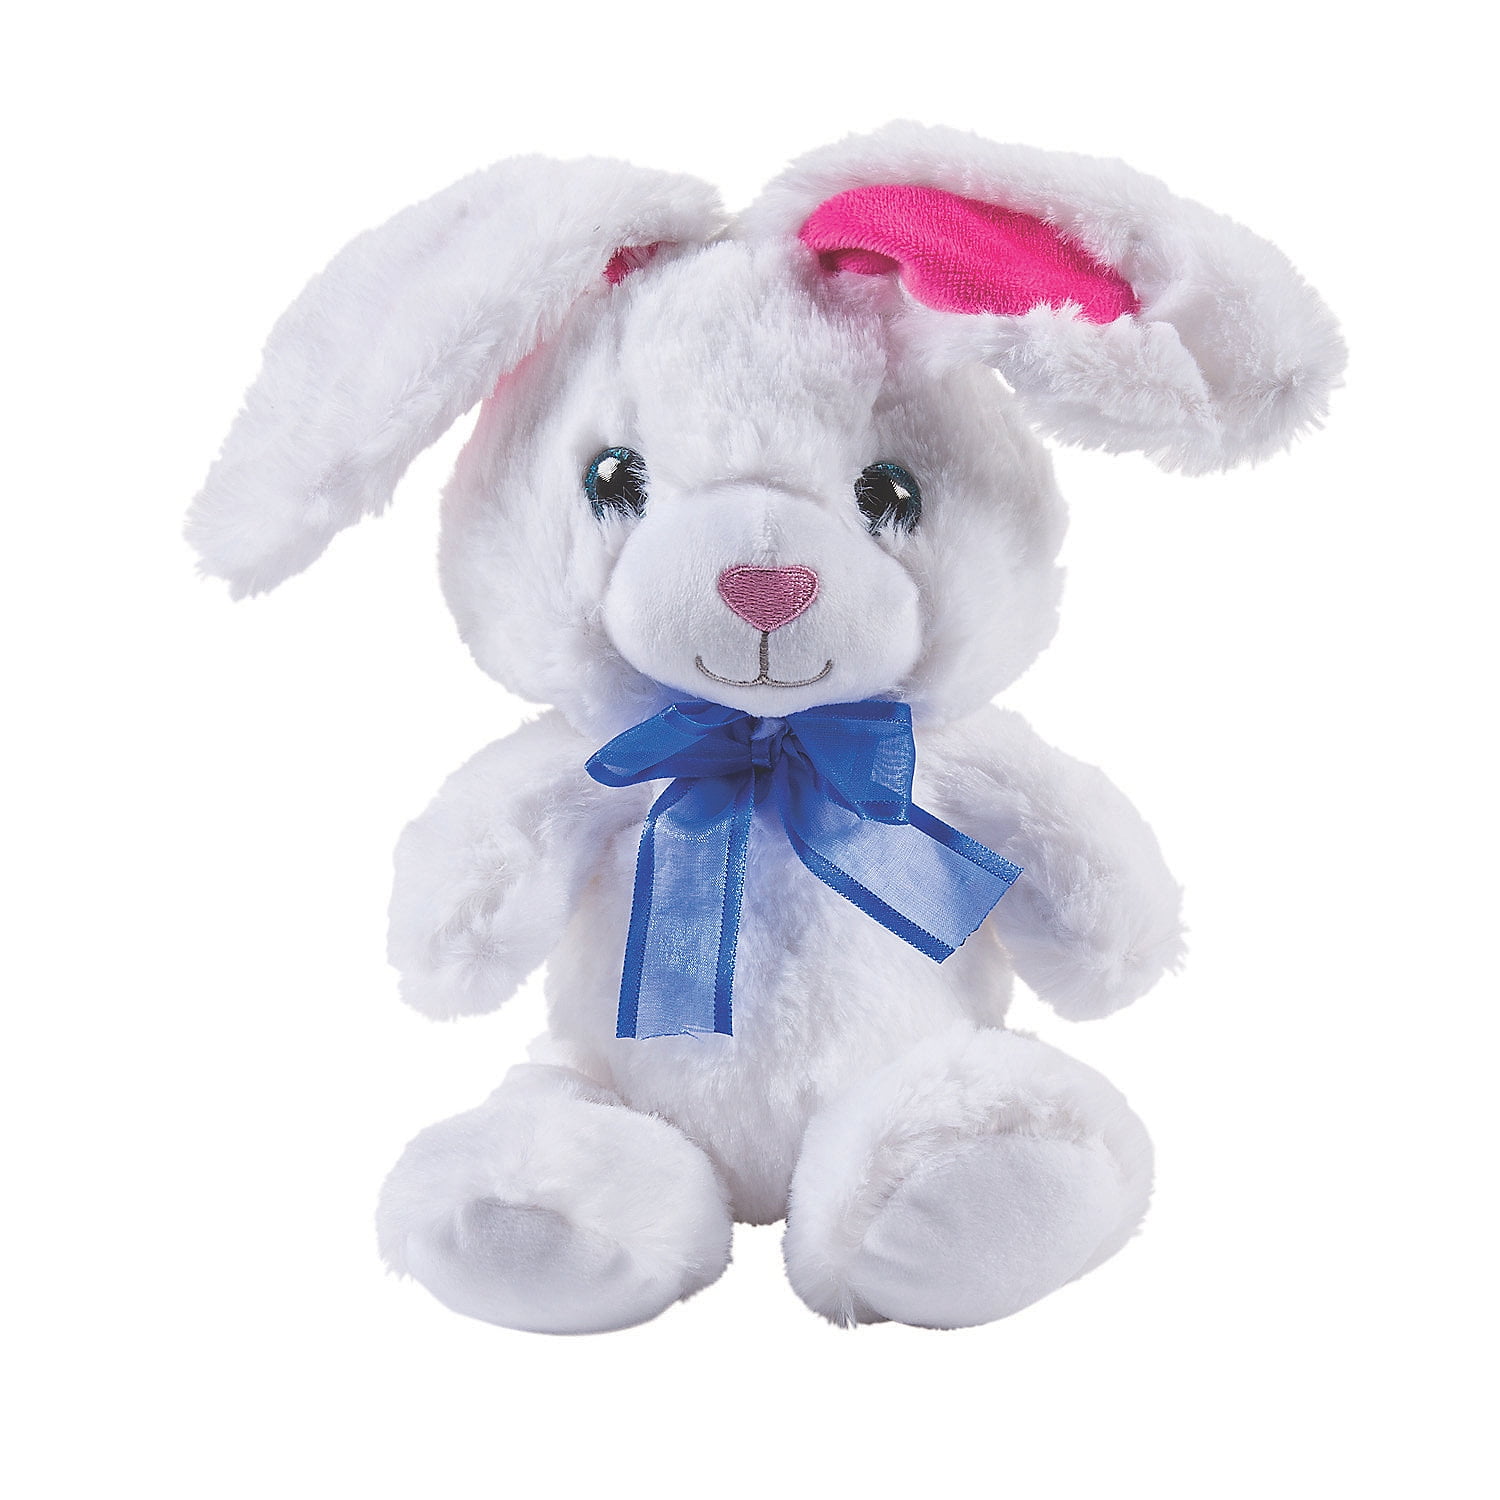 bunny toys walmart